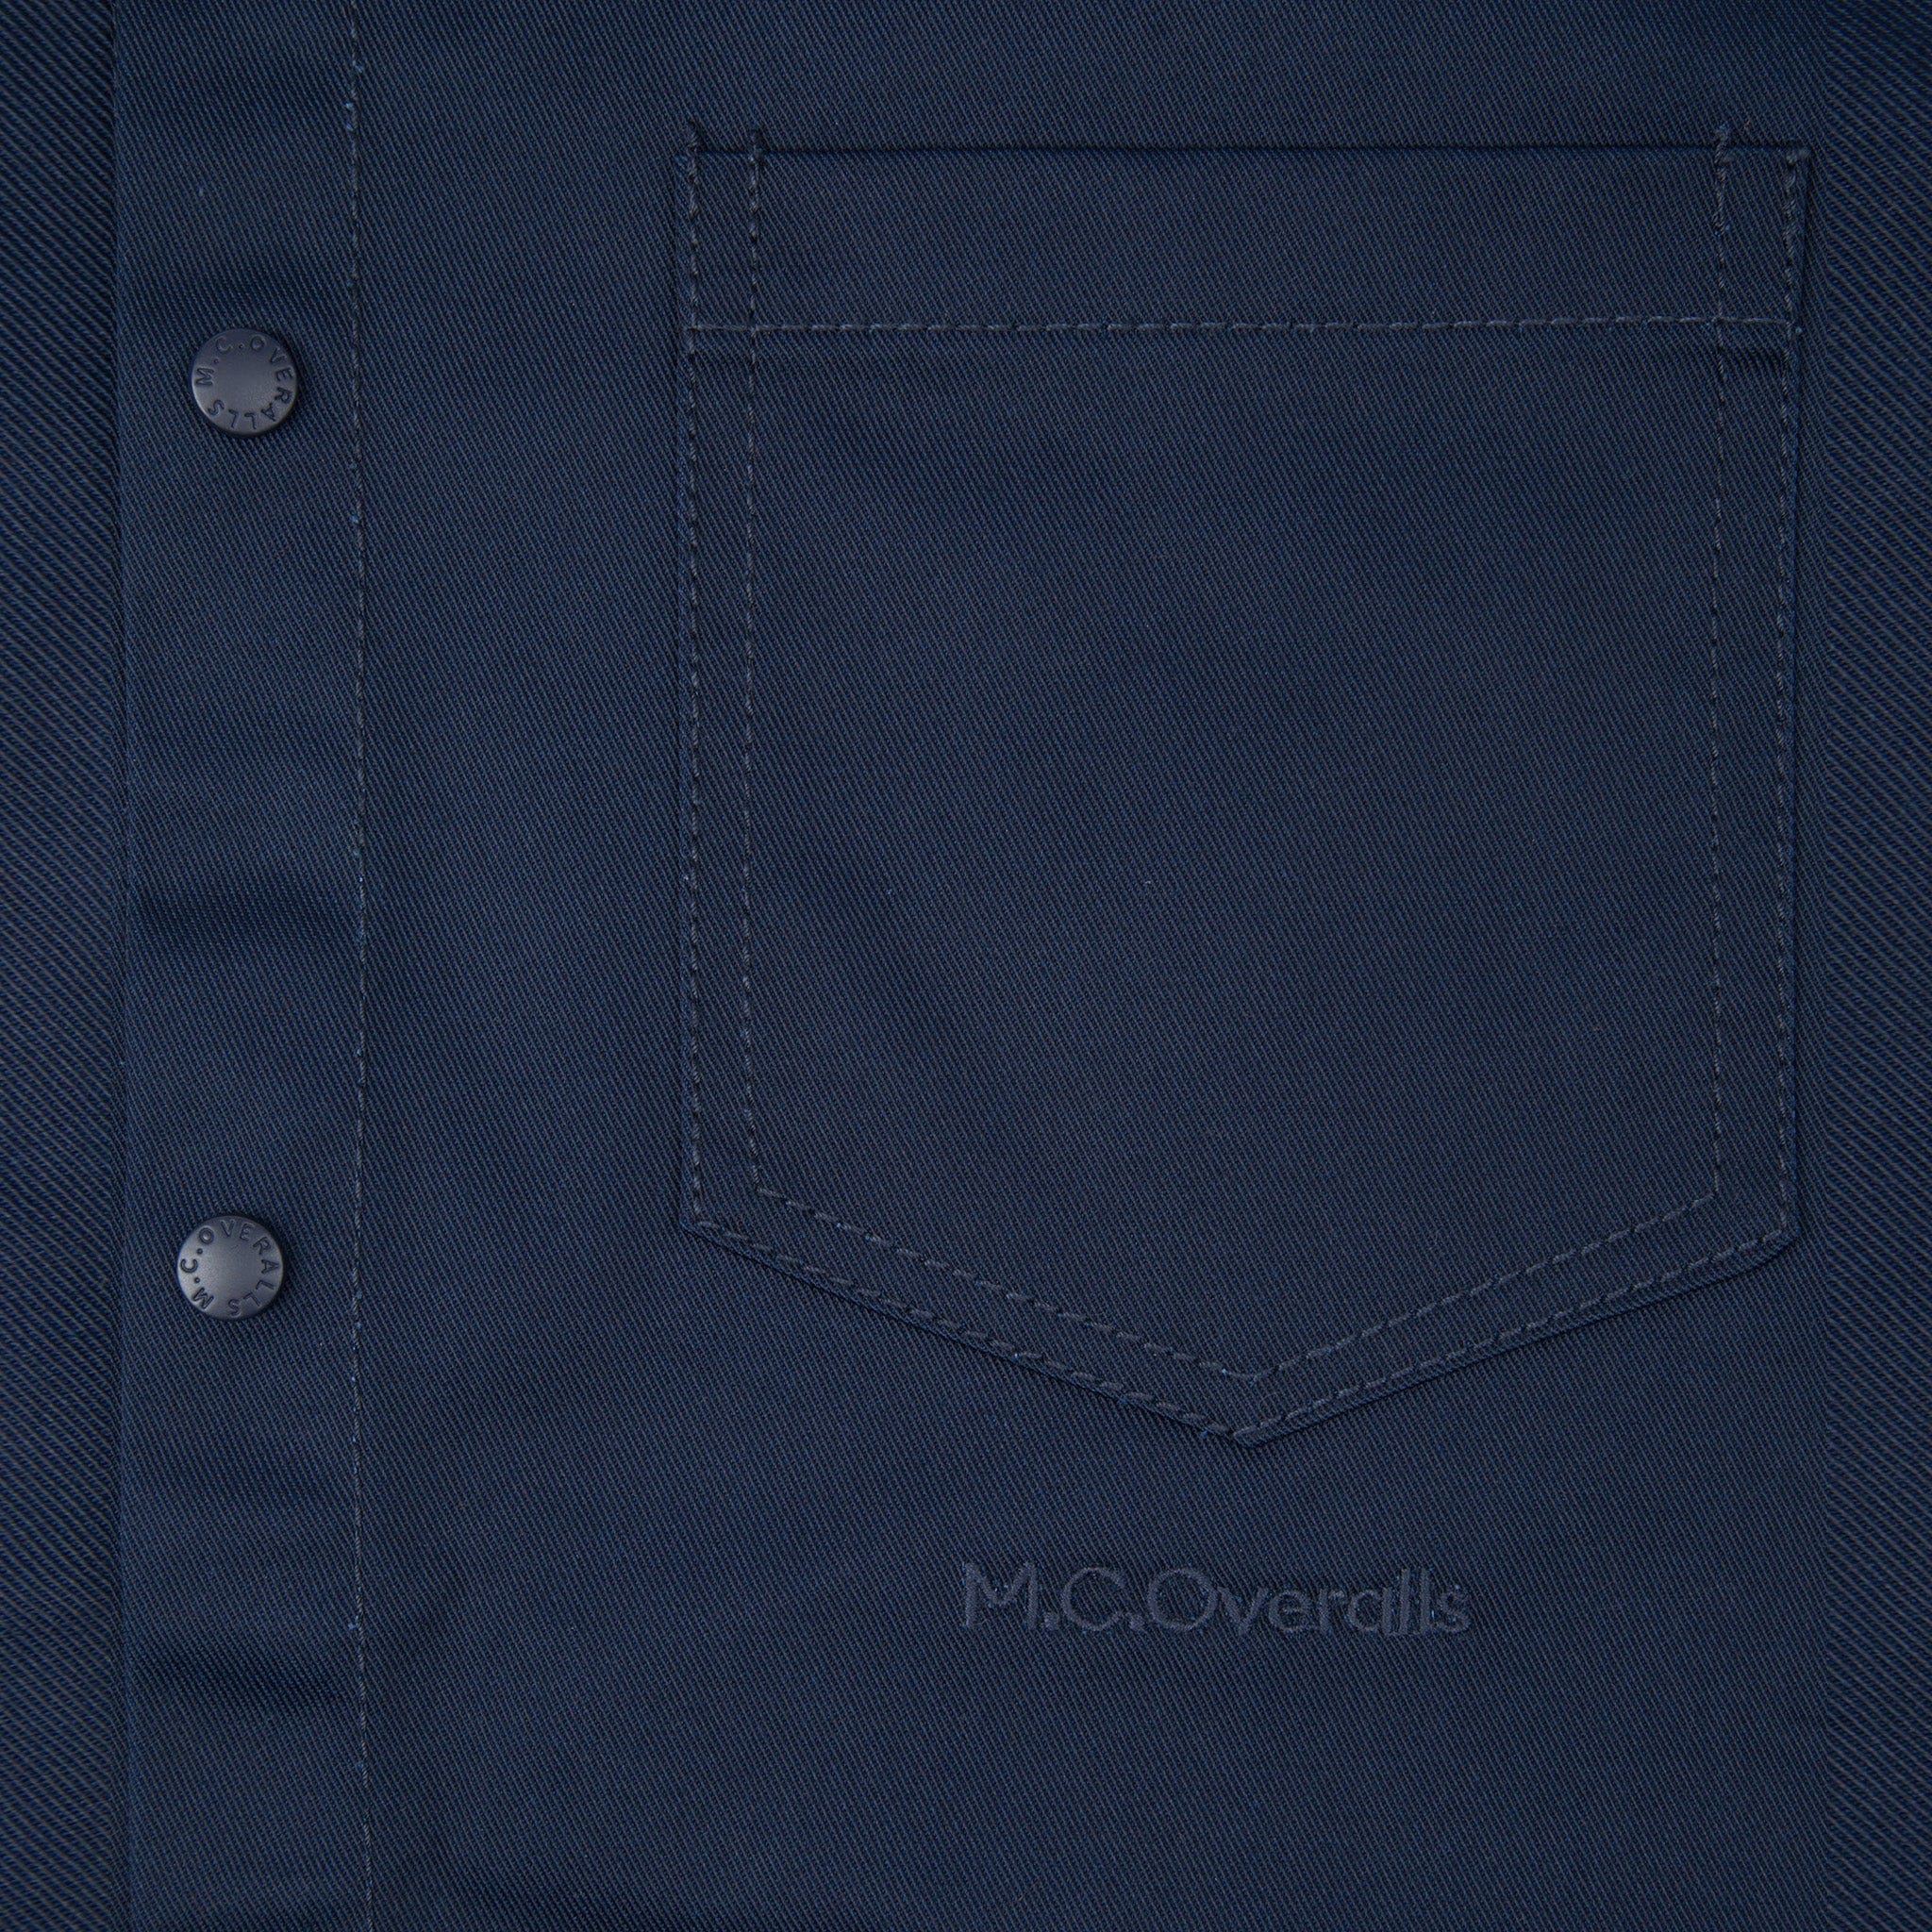 M.C.O&#39;s Logo Below the Pocket of the Navy Blue Snap Shirt in Soho, London.